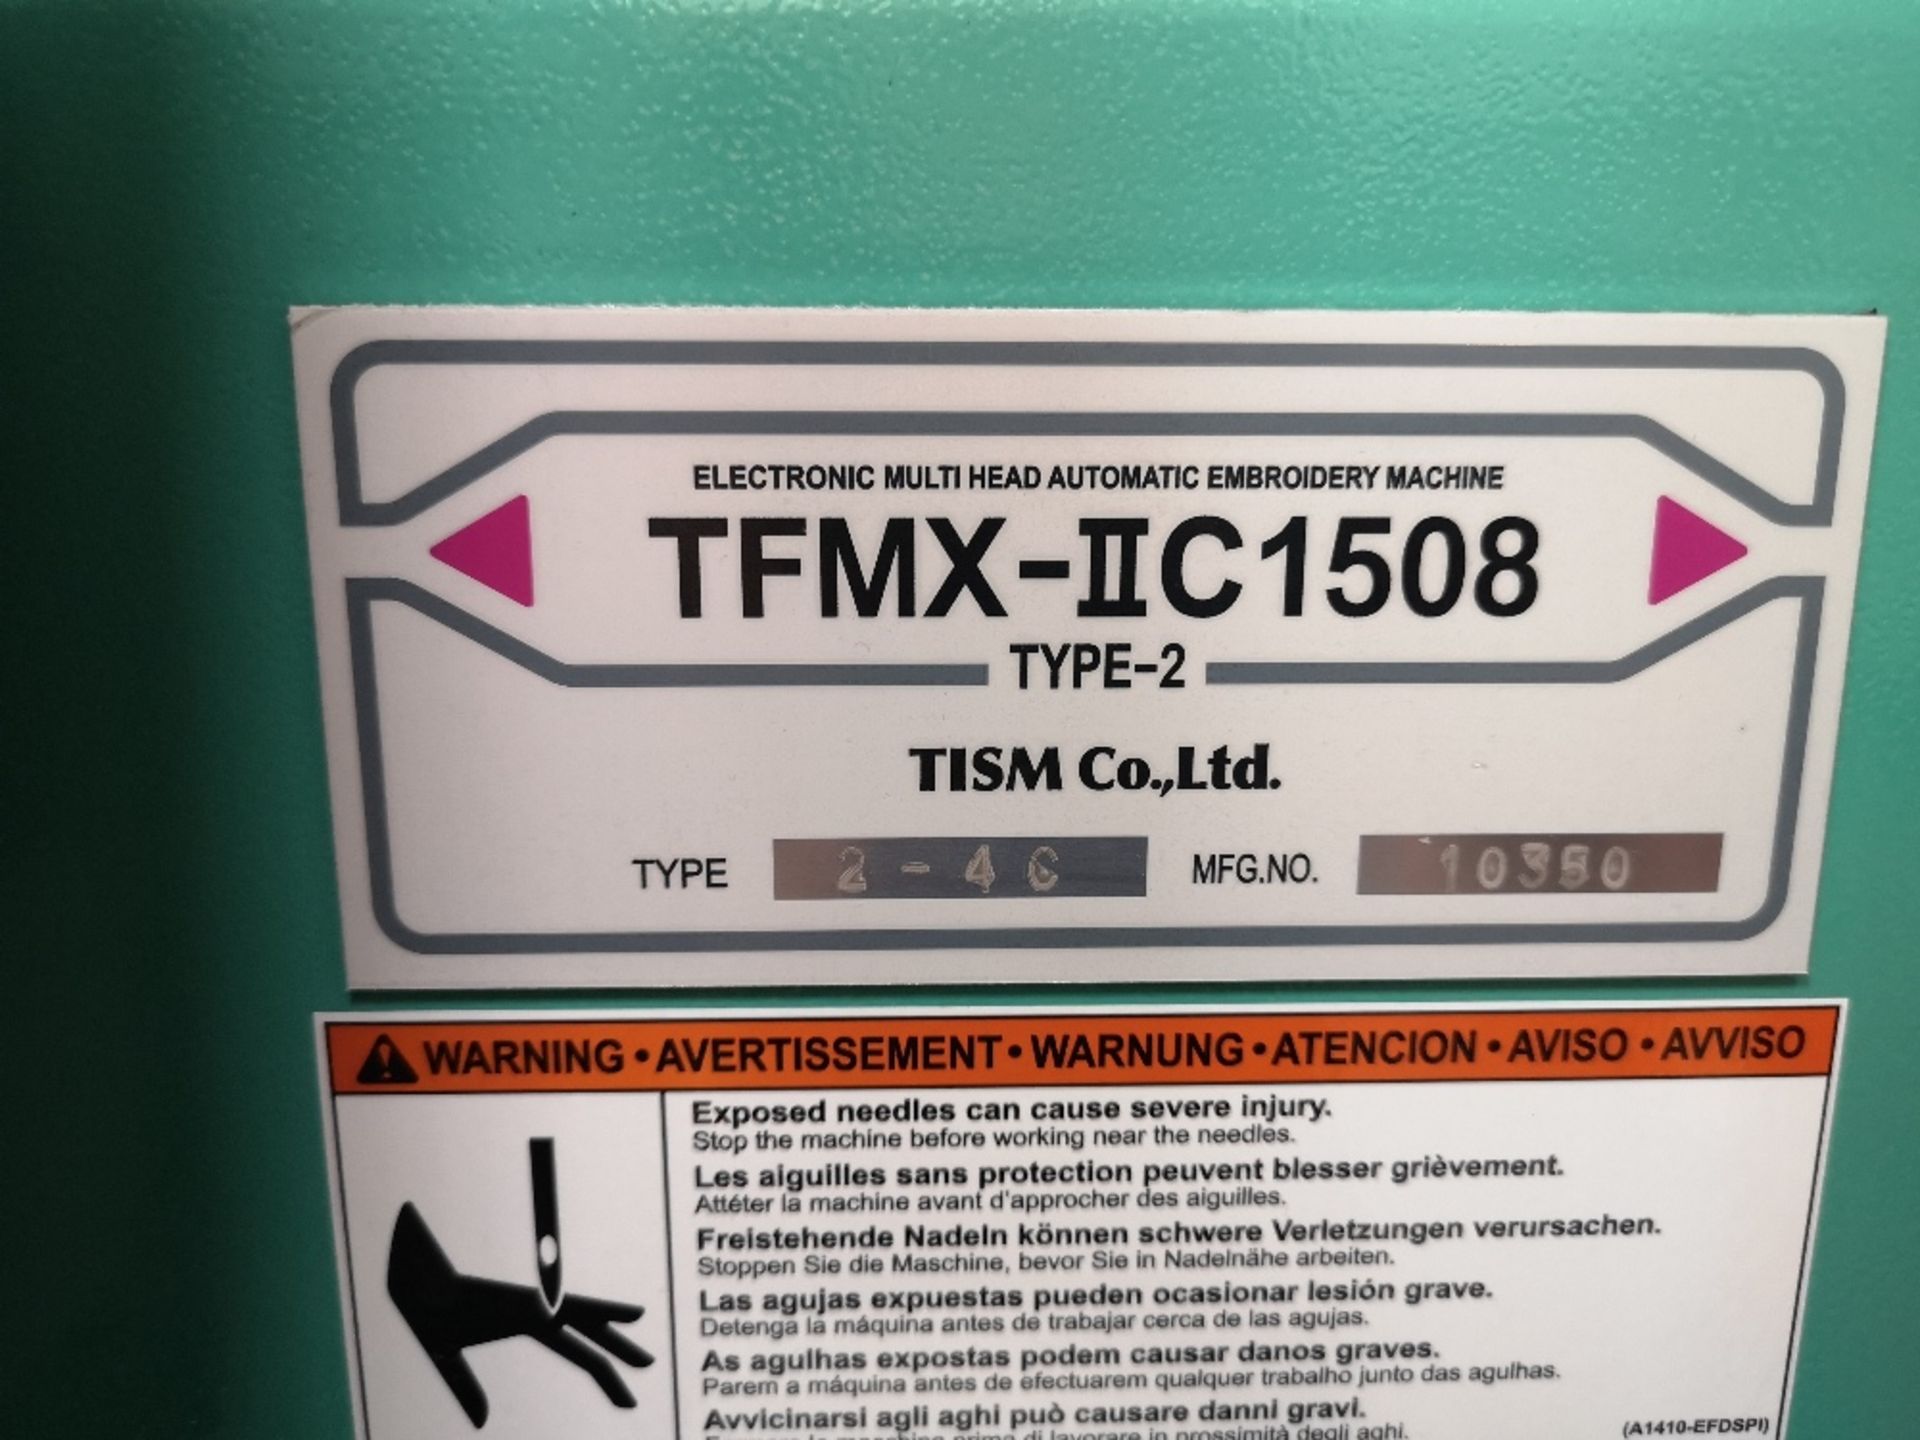 Tajima TFMX-II C1508 Electronic Multi Head Automatic Embroidery Machine (2019) - Image 7 of 8